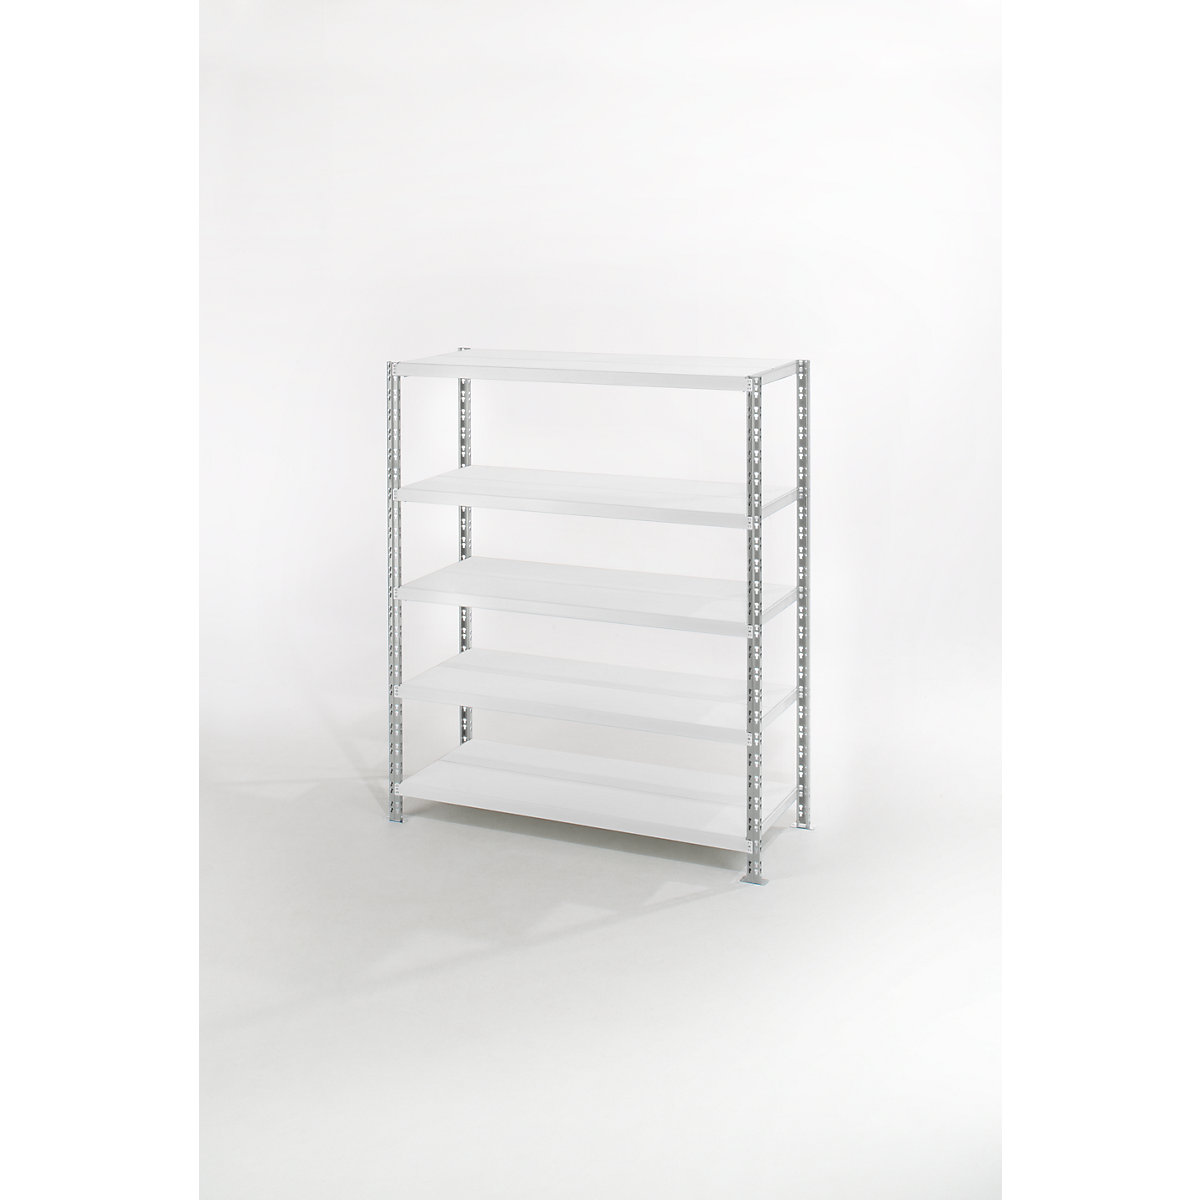 Wide span shelf unit with sheet steel shelves, depth 600 mm, standard shelf unit, HxW 1820 x 1550 mm